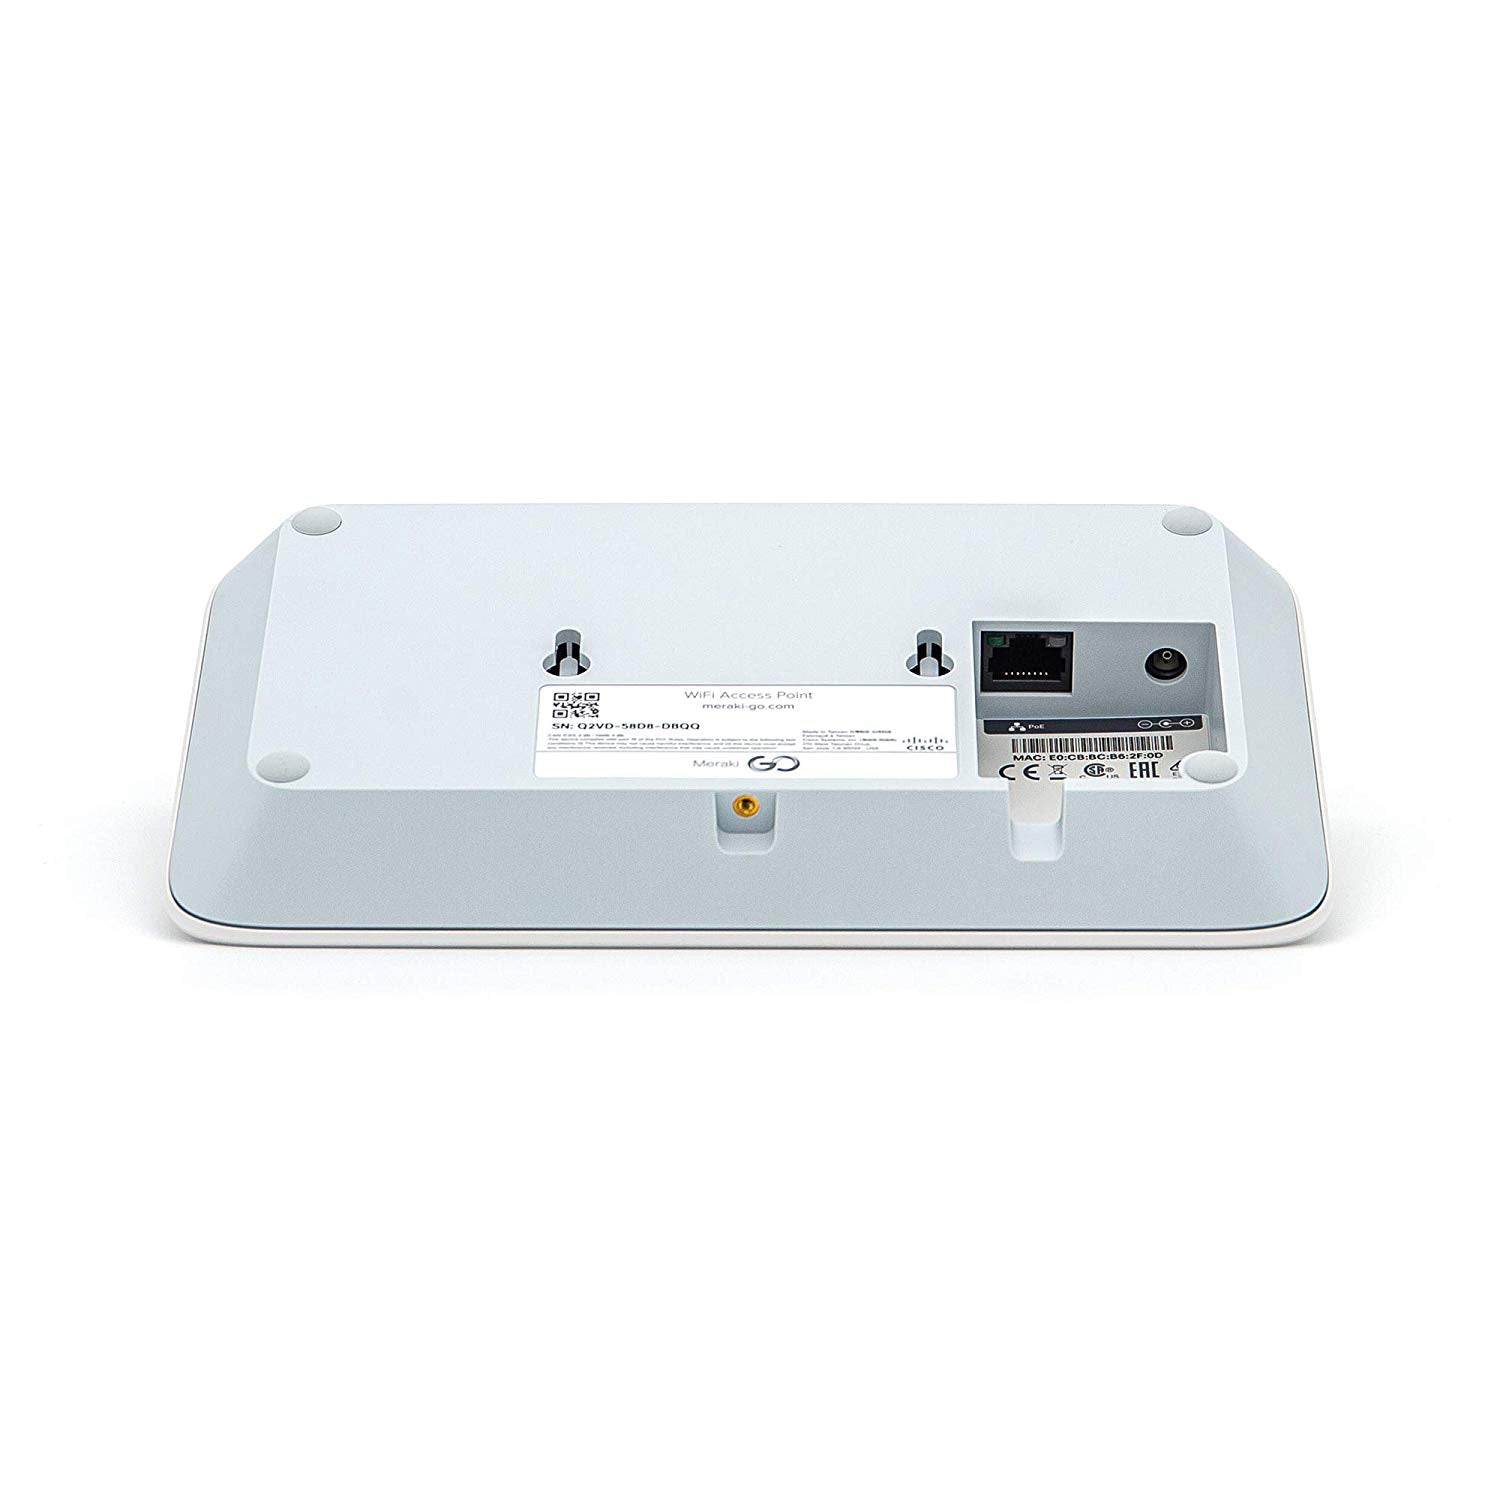 Meraki Go 24 Port Cloud Managed (PoE) Network Switch - GS110 – UC